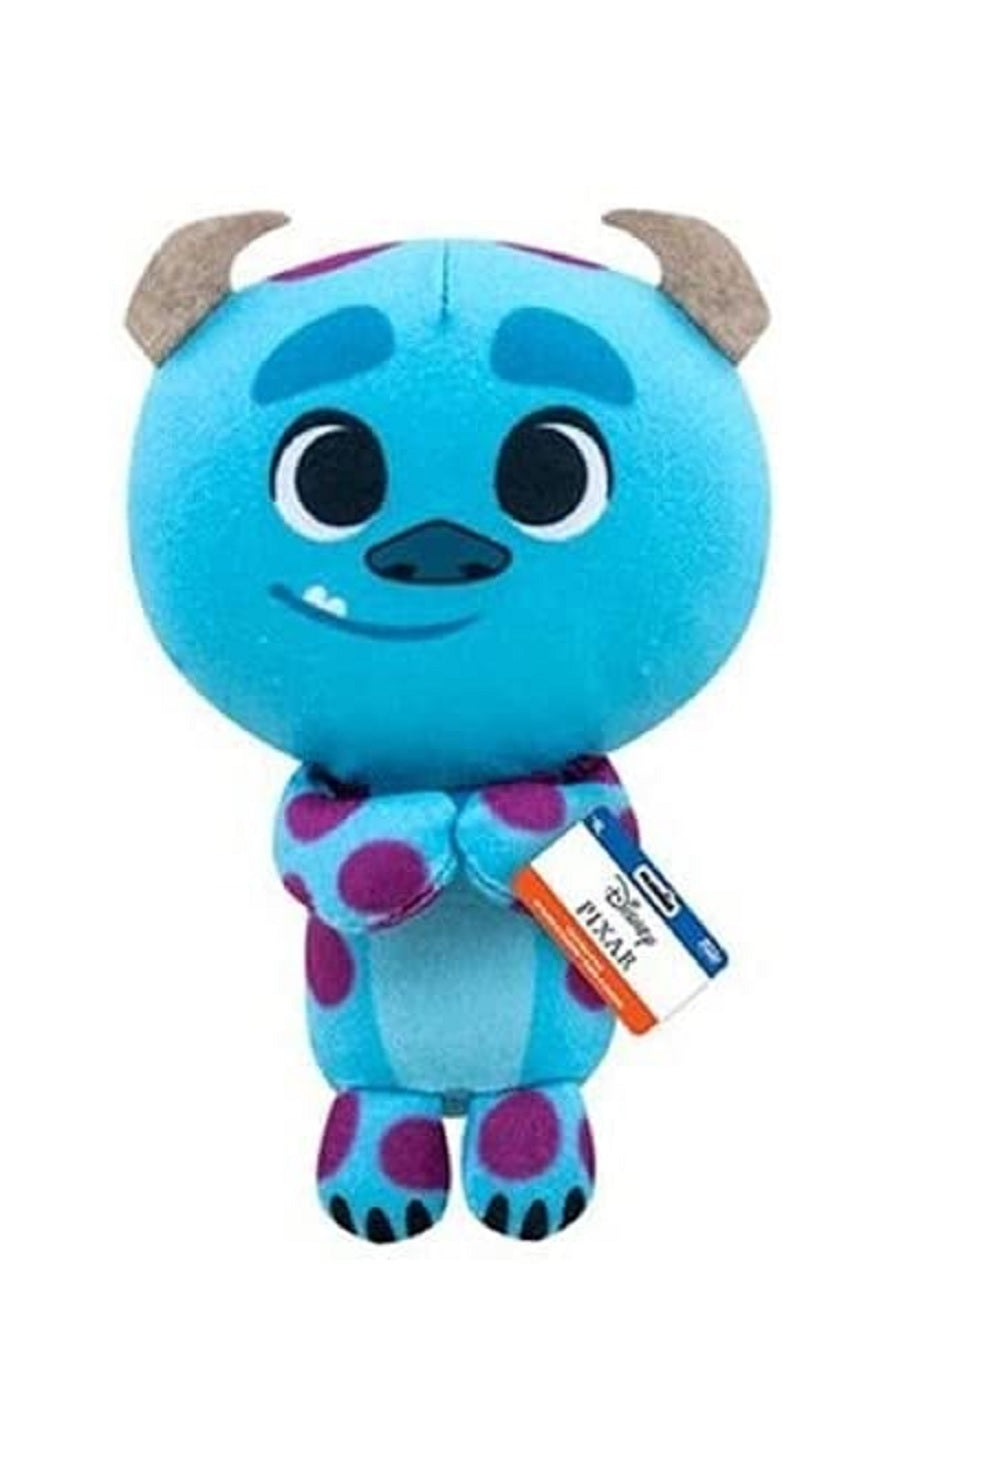 Funko Pop! Disney Plush: Pixar Monsters, Inc. - Sulley 4" Plush